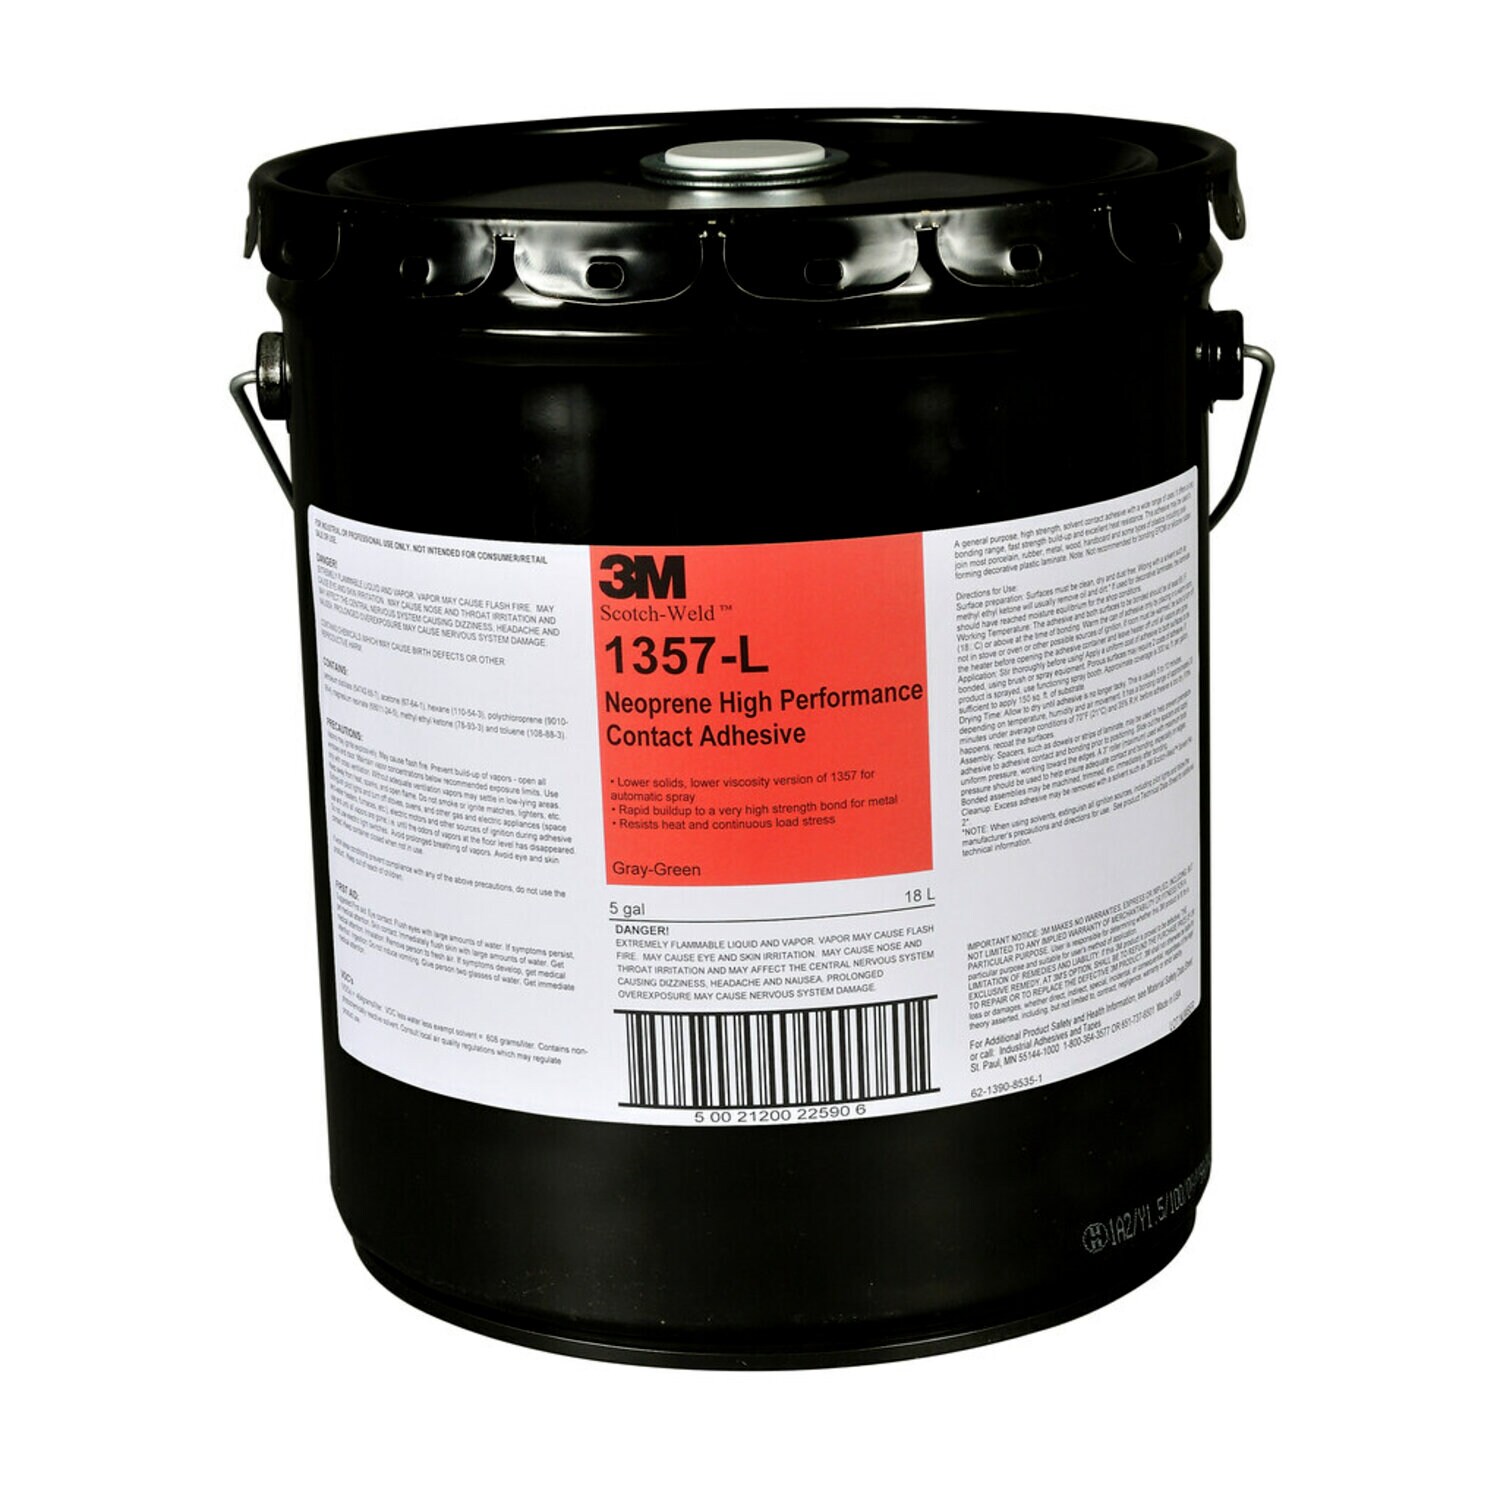 7000000805 - 3M Neoprene High Performance Contact Adhesive 1357L, Gray-Green, 5
Gallon Drum (Pail)